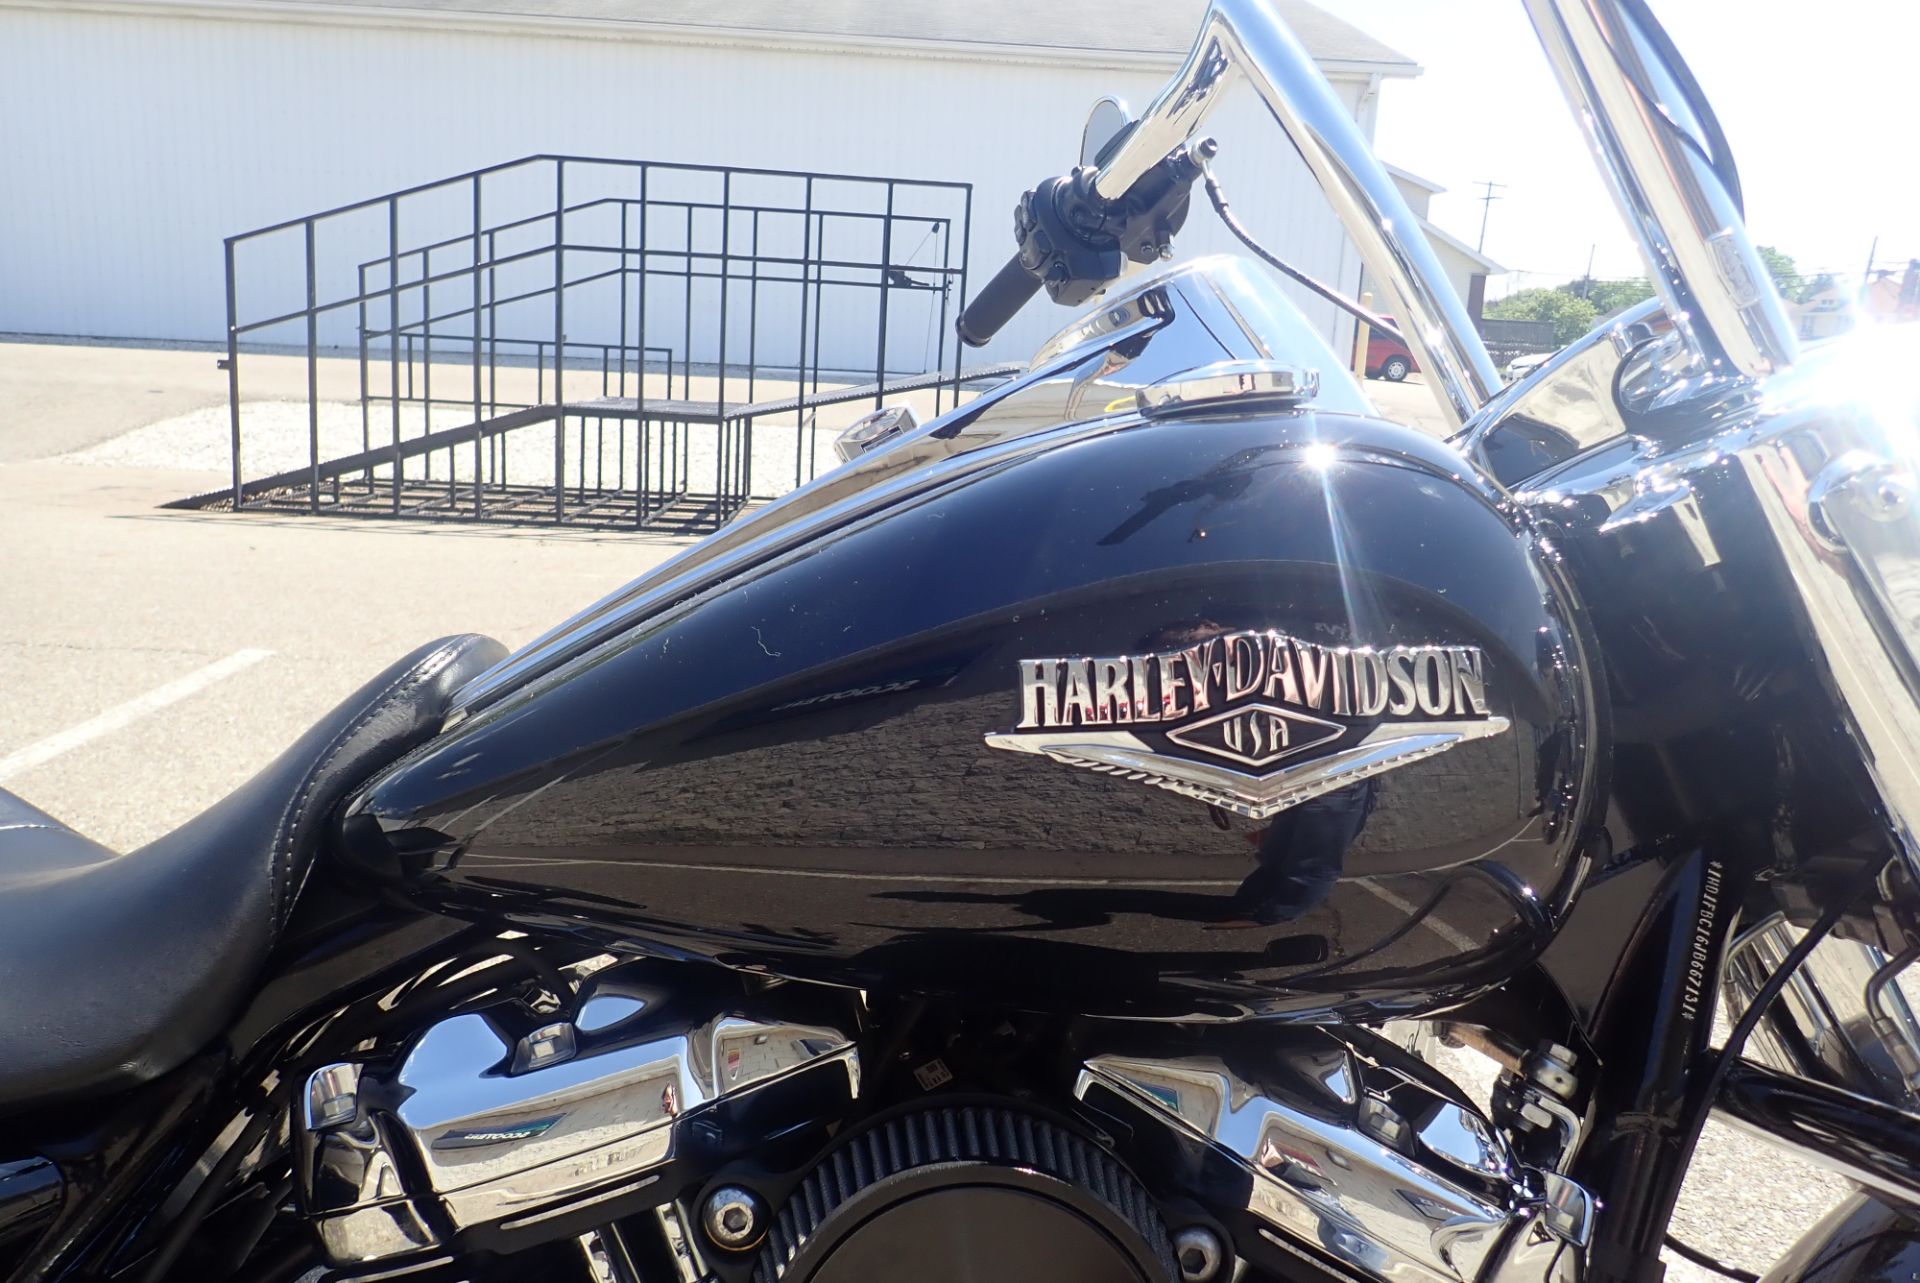 2018 Harley-Davidson Road King® in Massillon, Ohio - Photo 3